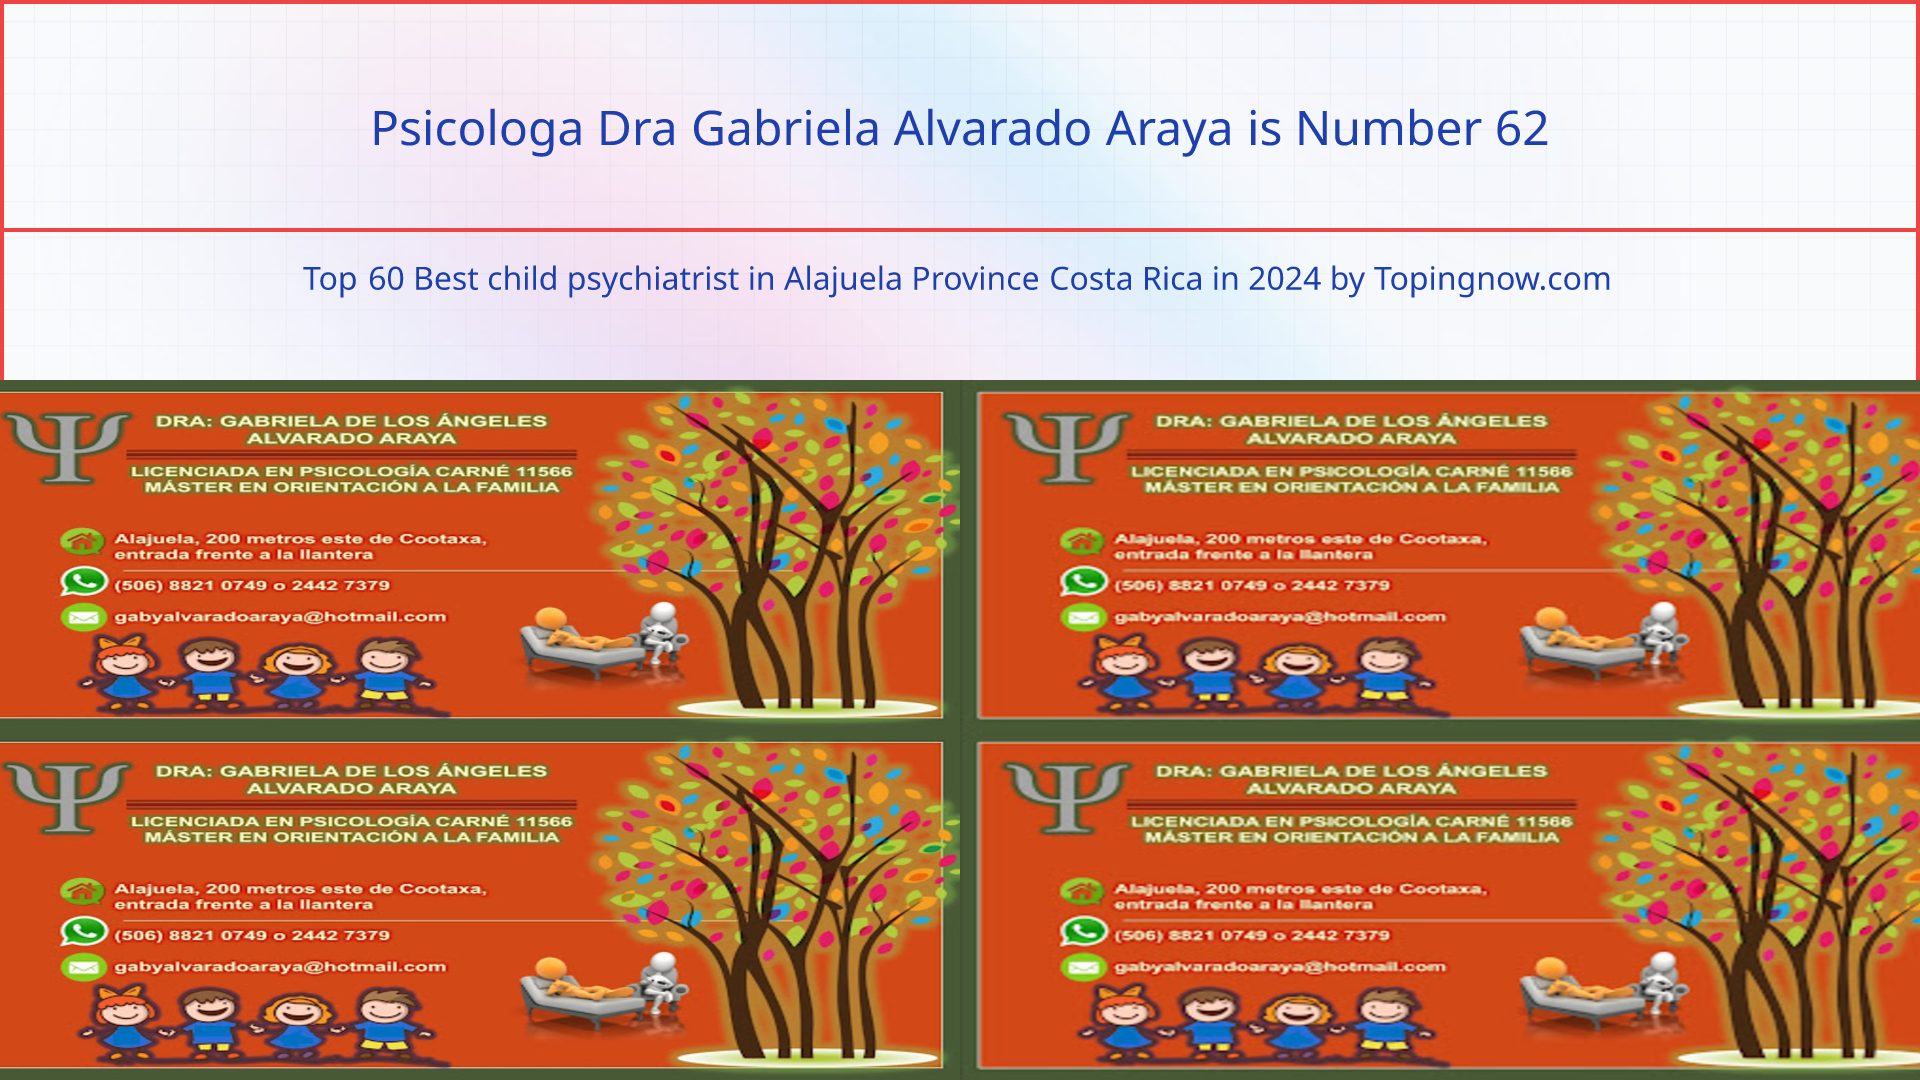 Psicologa Dra Gabriela Alvarado Araya: Top 60 Best child psychiatrist in Alajuela Province Costa Rica in 2024